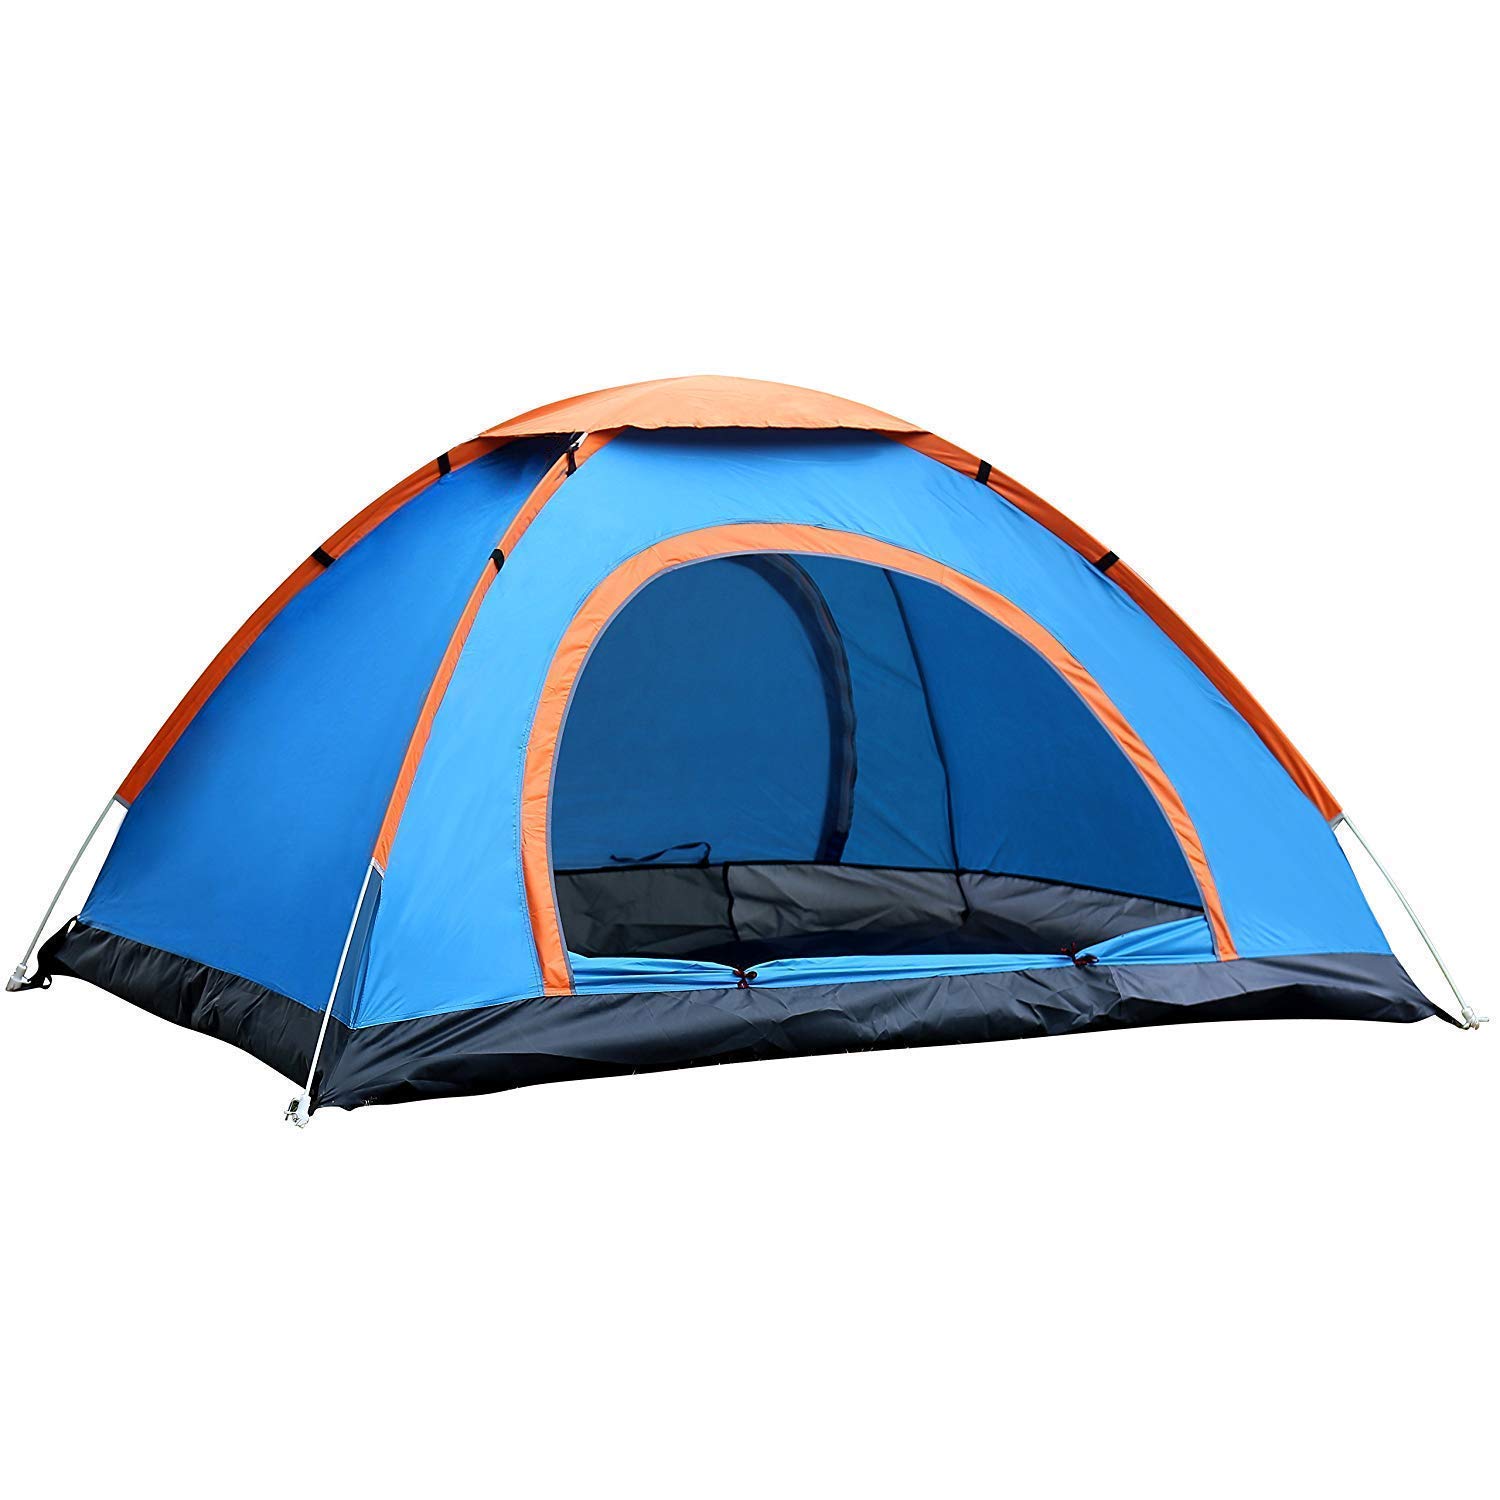 camping tents - Egab Picnic Camping Portable 4 Person Tent